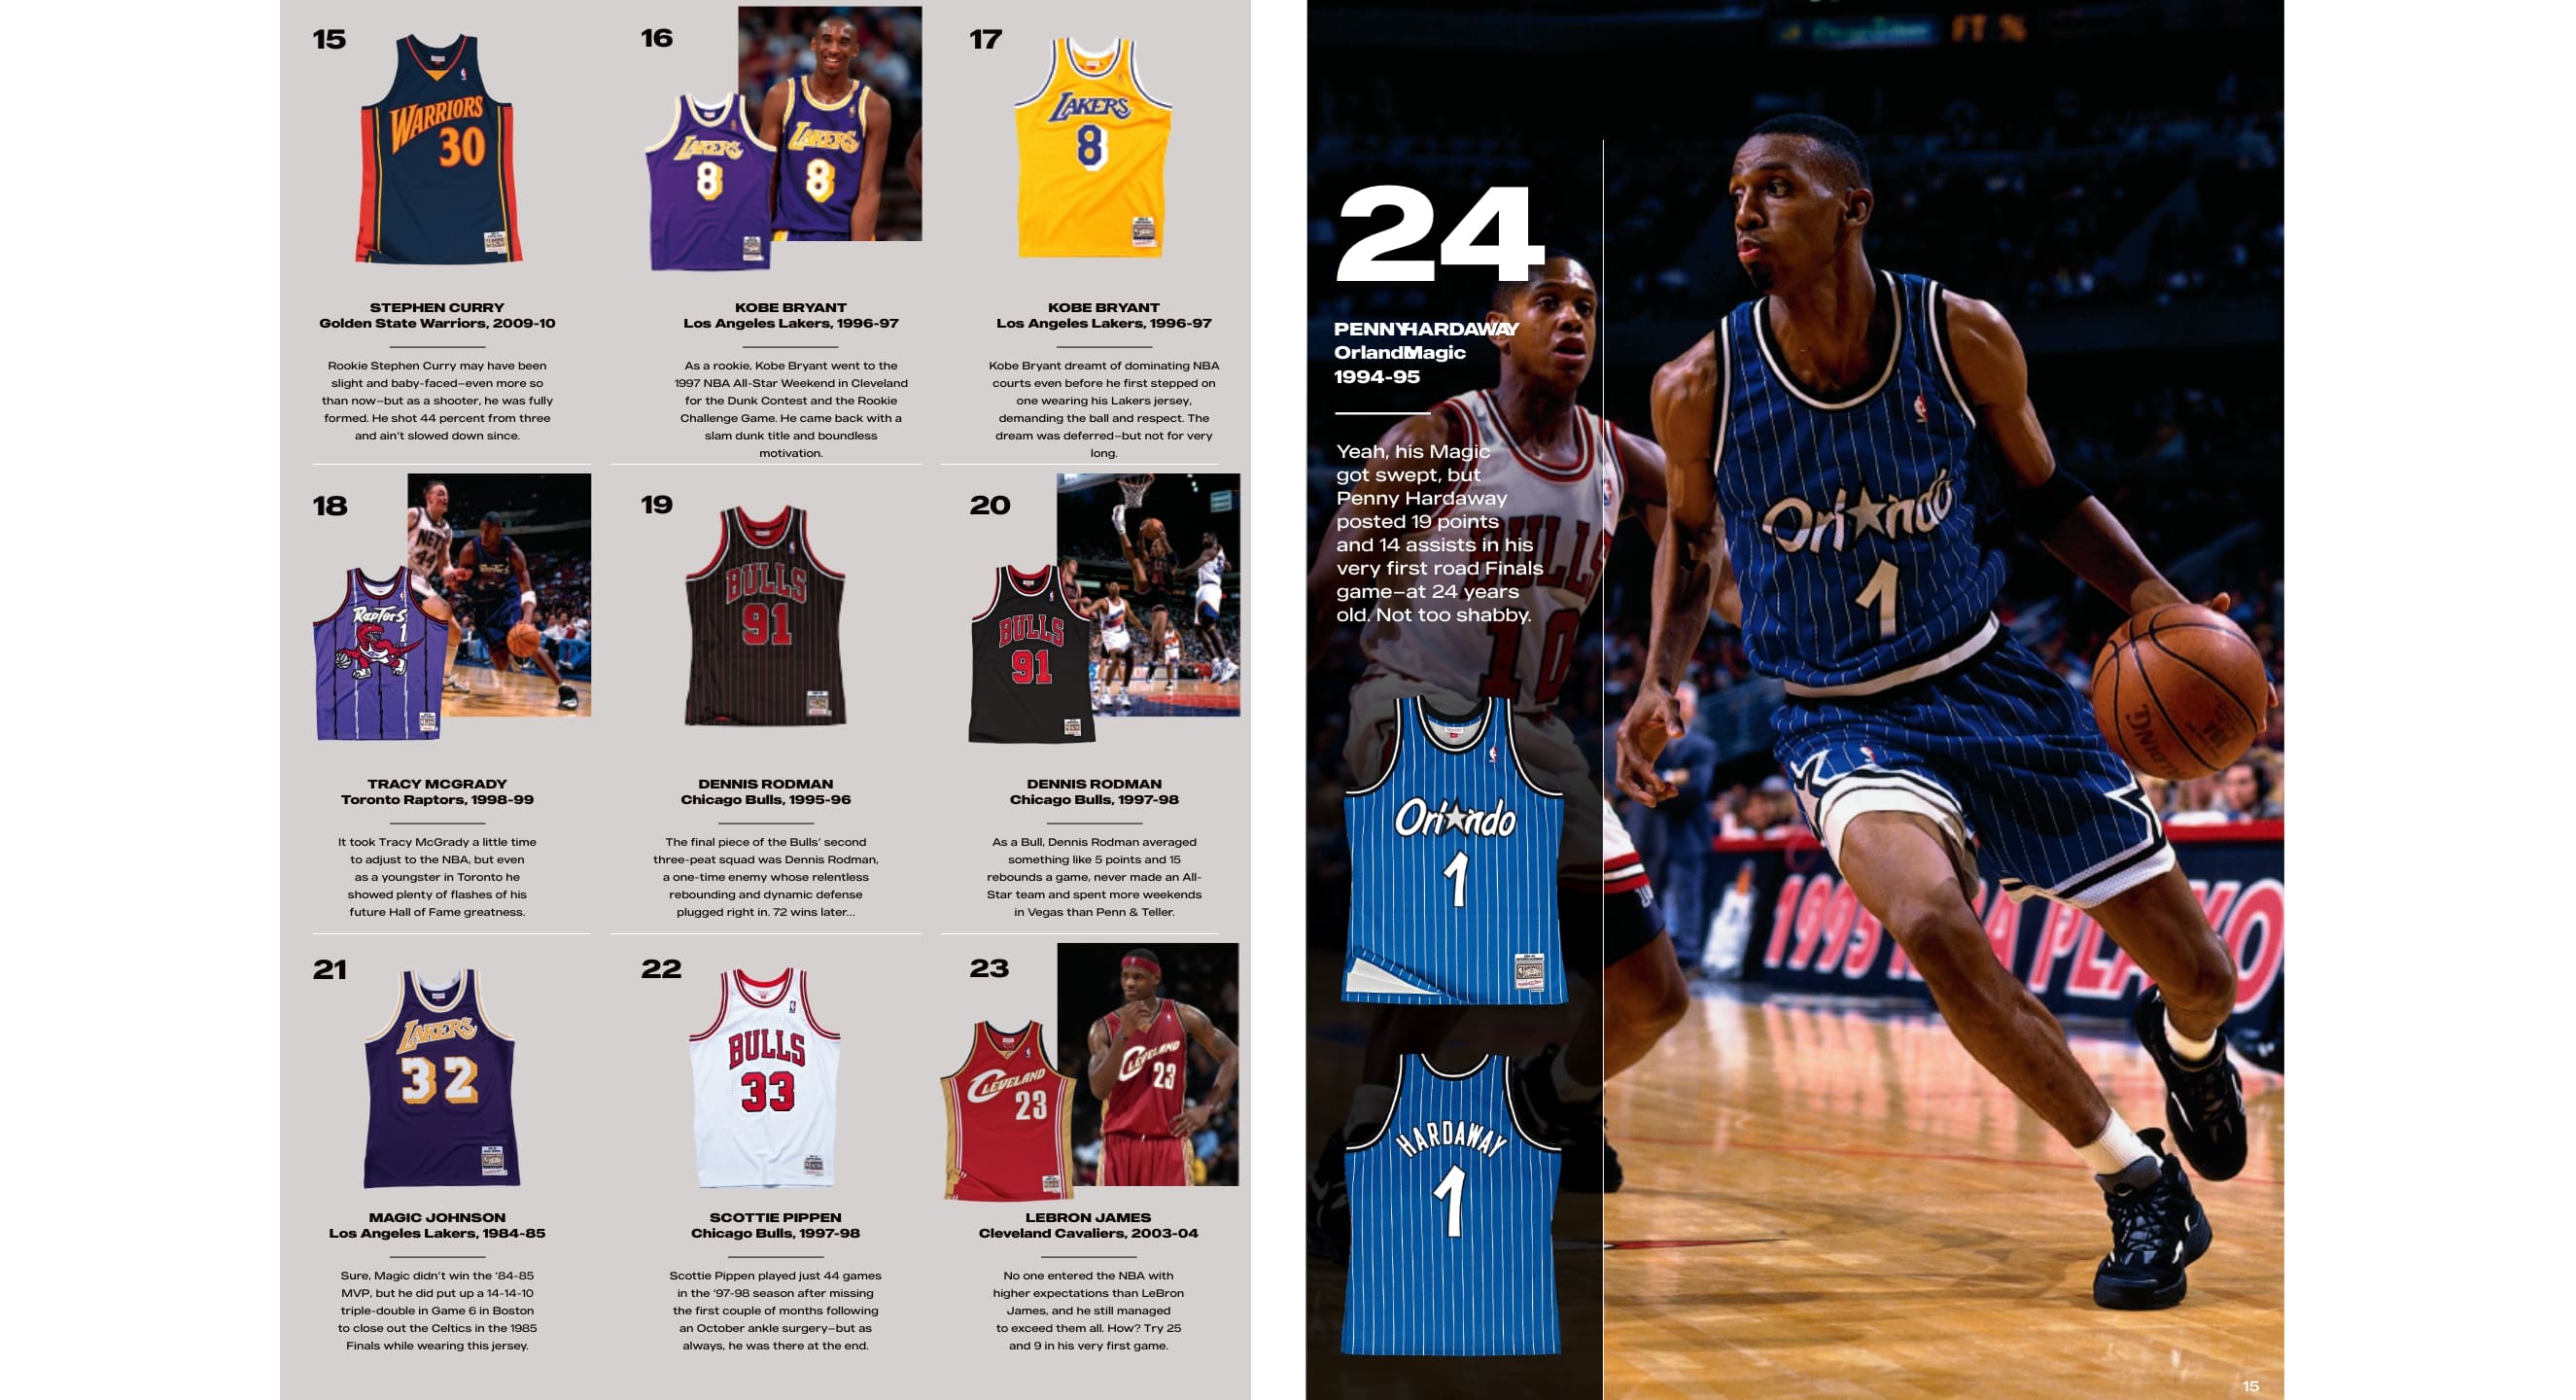 #15 Stephen Curry - #16 Kobe Bryant - #17 Kobe Bryant - #18 Tracy McGrady - #19 Dniis Rodman - #21 Magic Johnson - #22 Scottie Pippen - #23 Lebron James - #24 Penny Hardaway